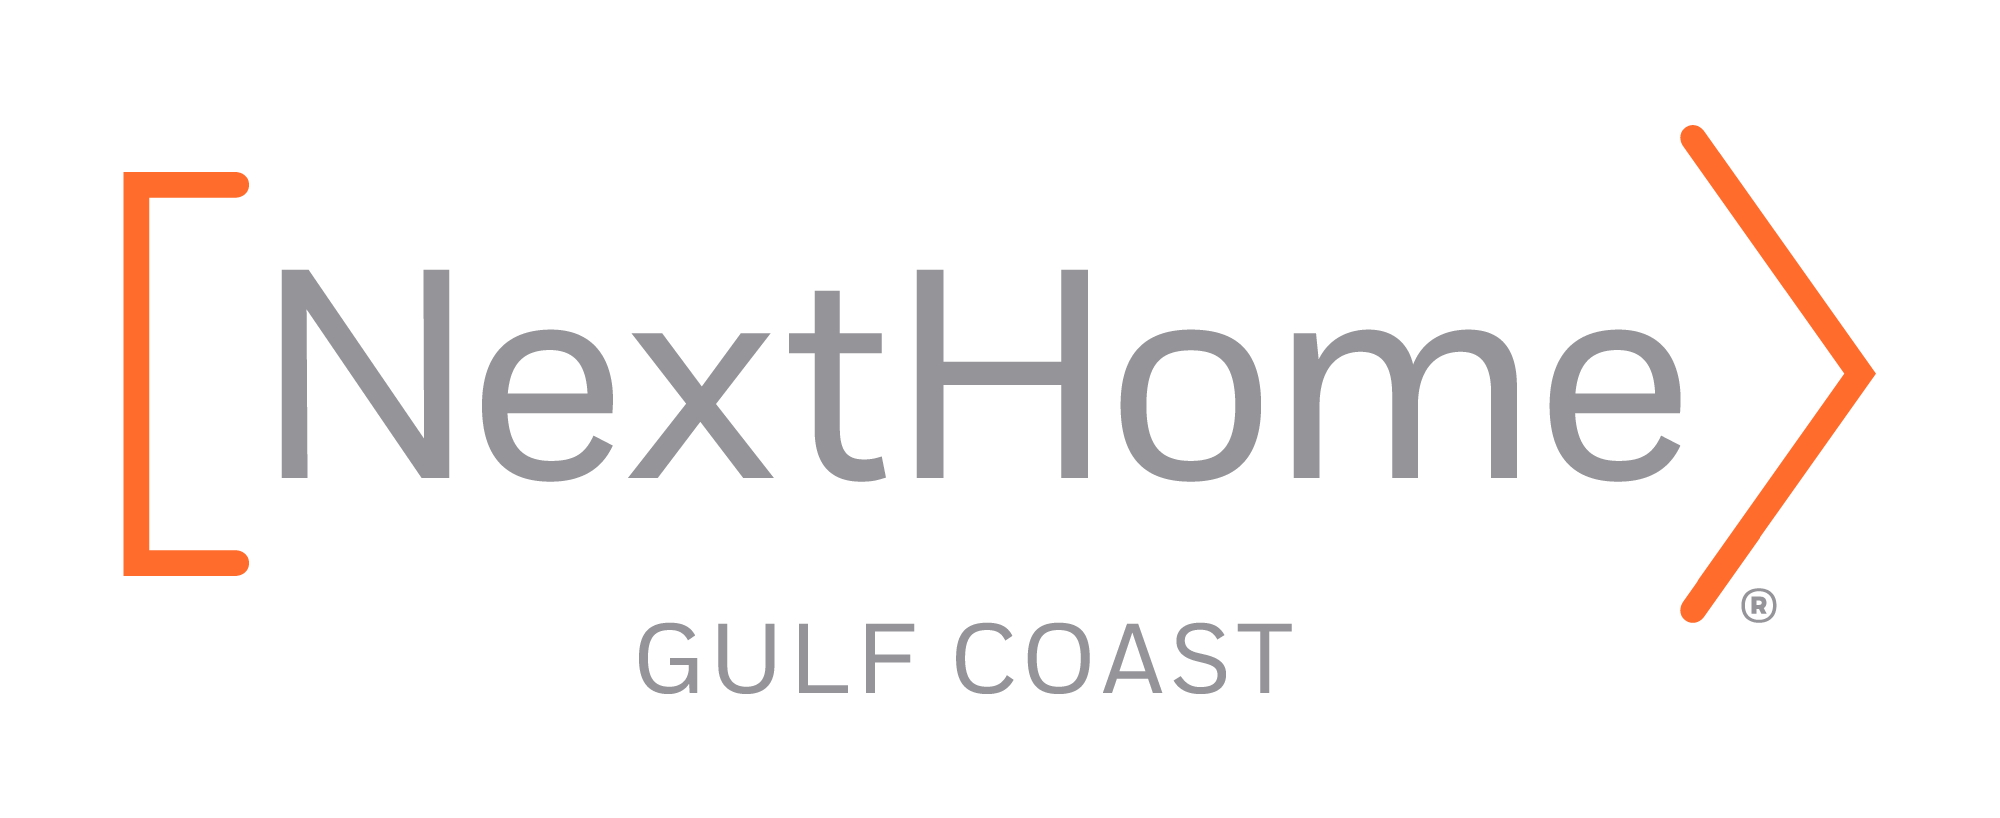 NextHome Gulf Coast - Angie Haddon Realtor